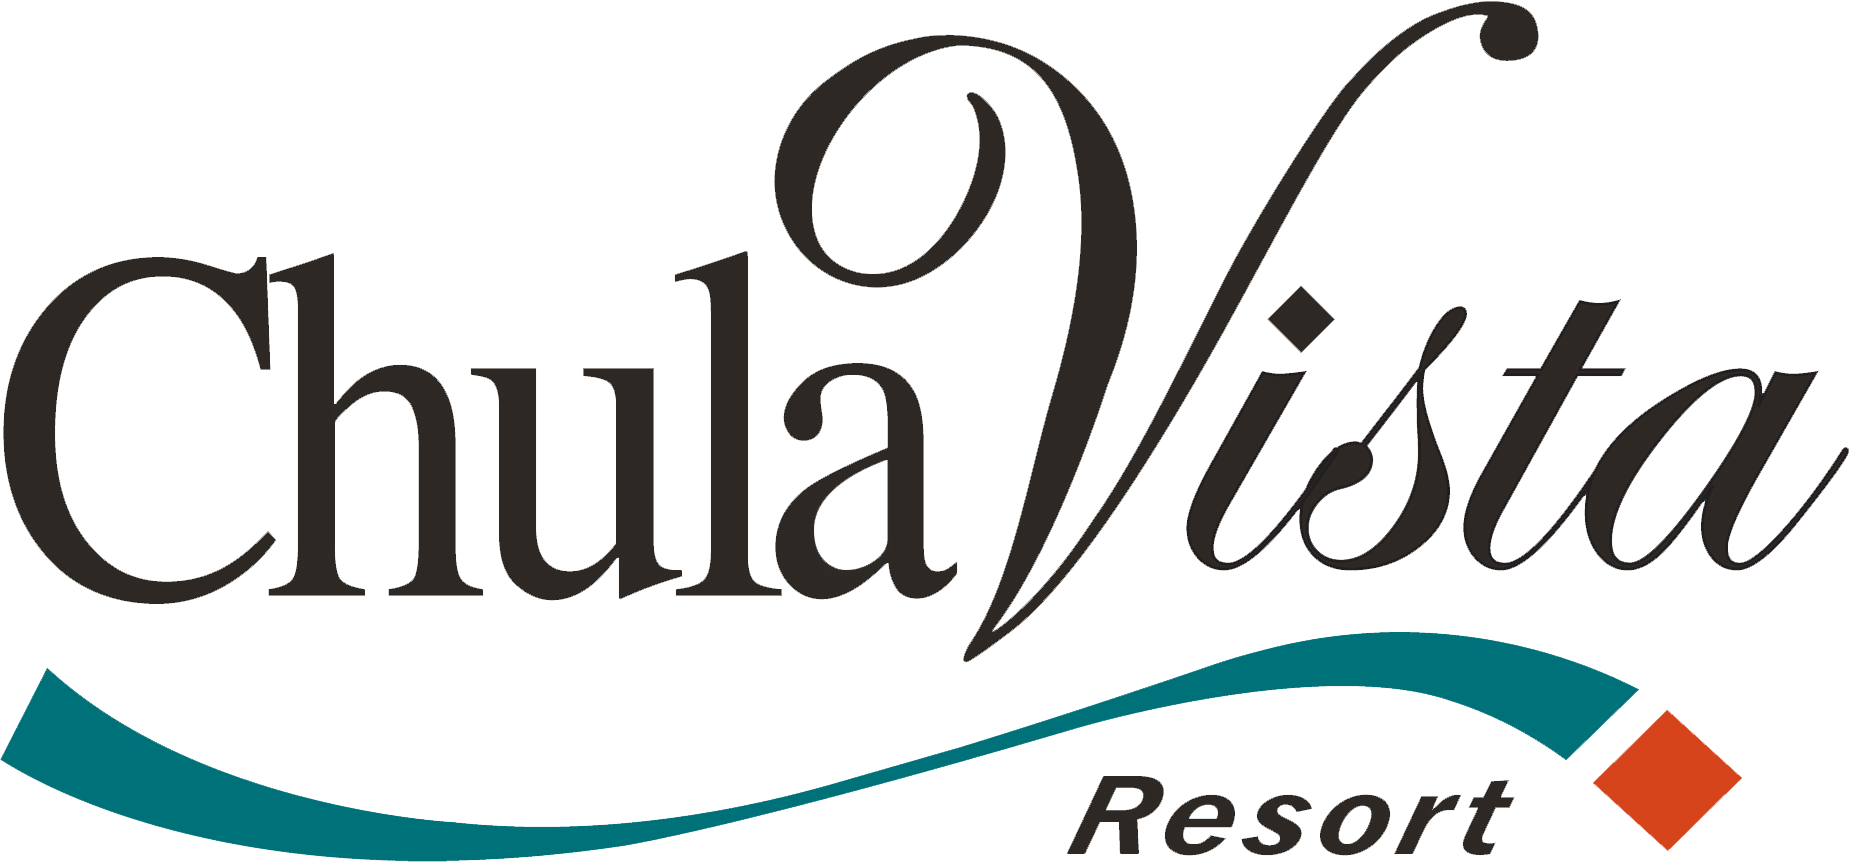 ChulaVista Resort Sponsor Green Card USA Reimagine immigration